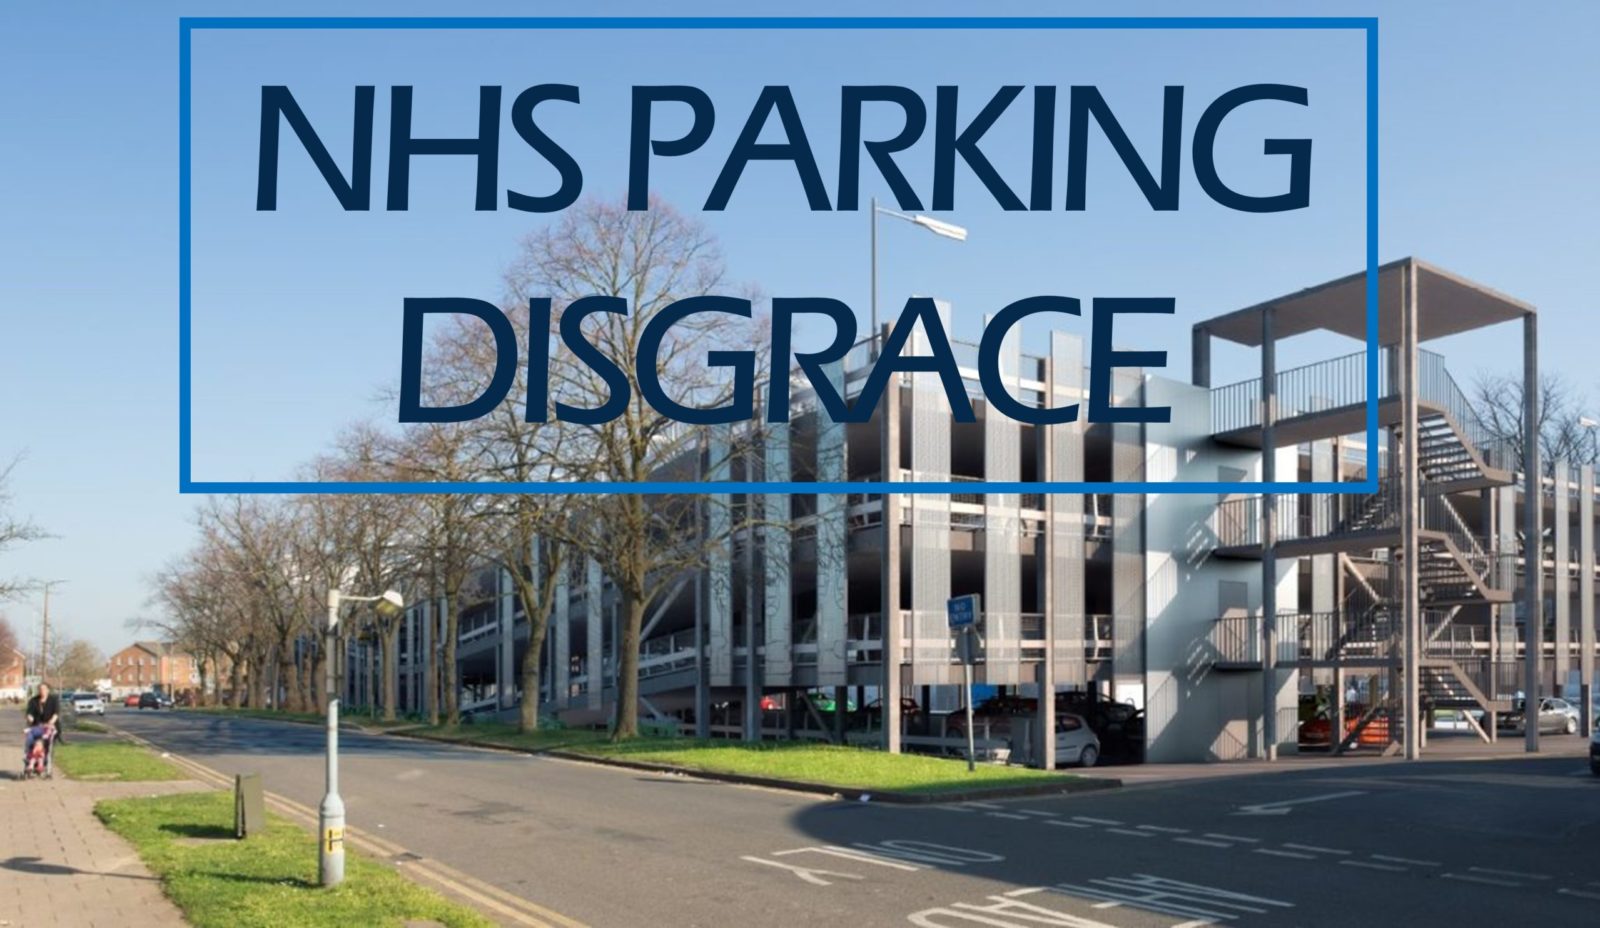 NHS Parking Disgrace